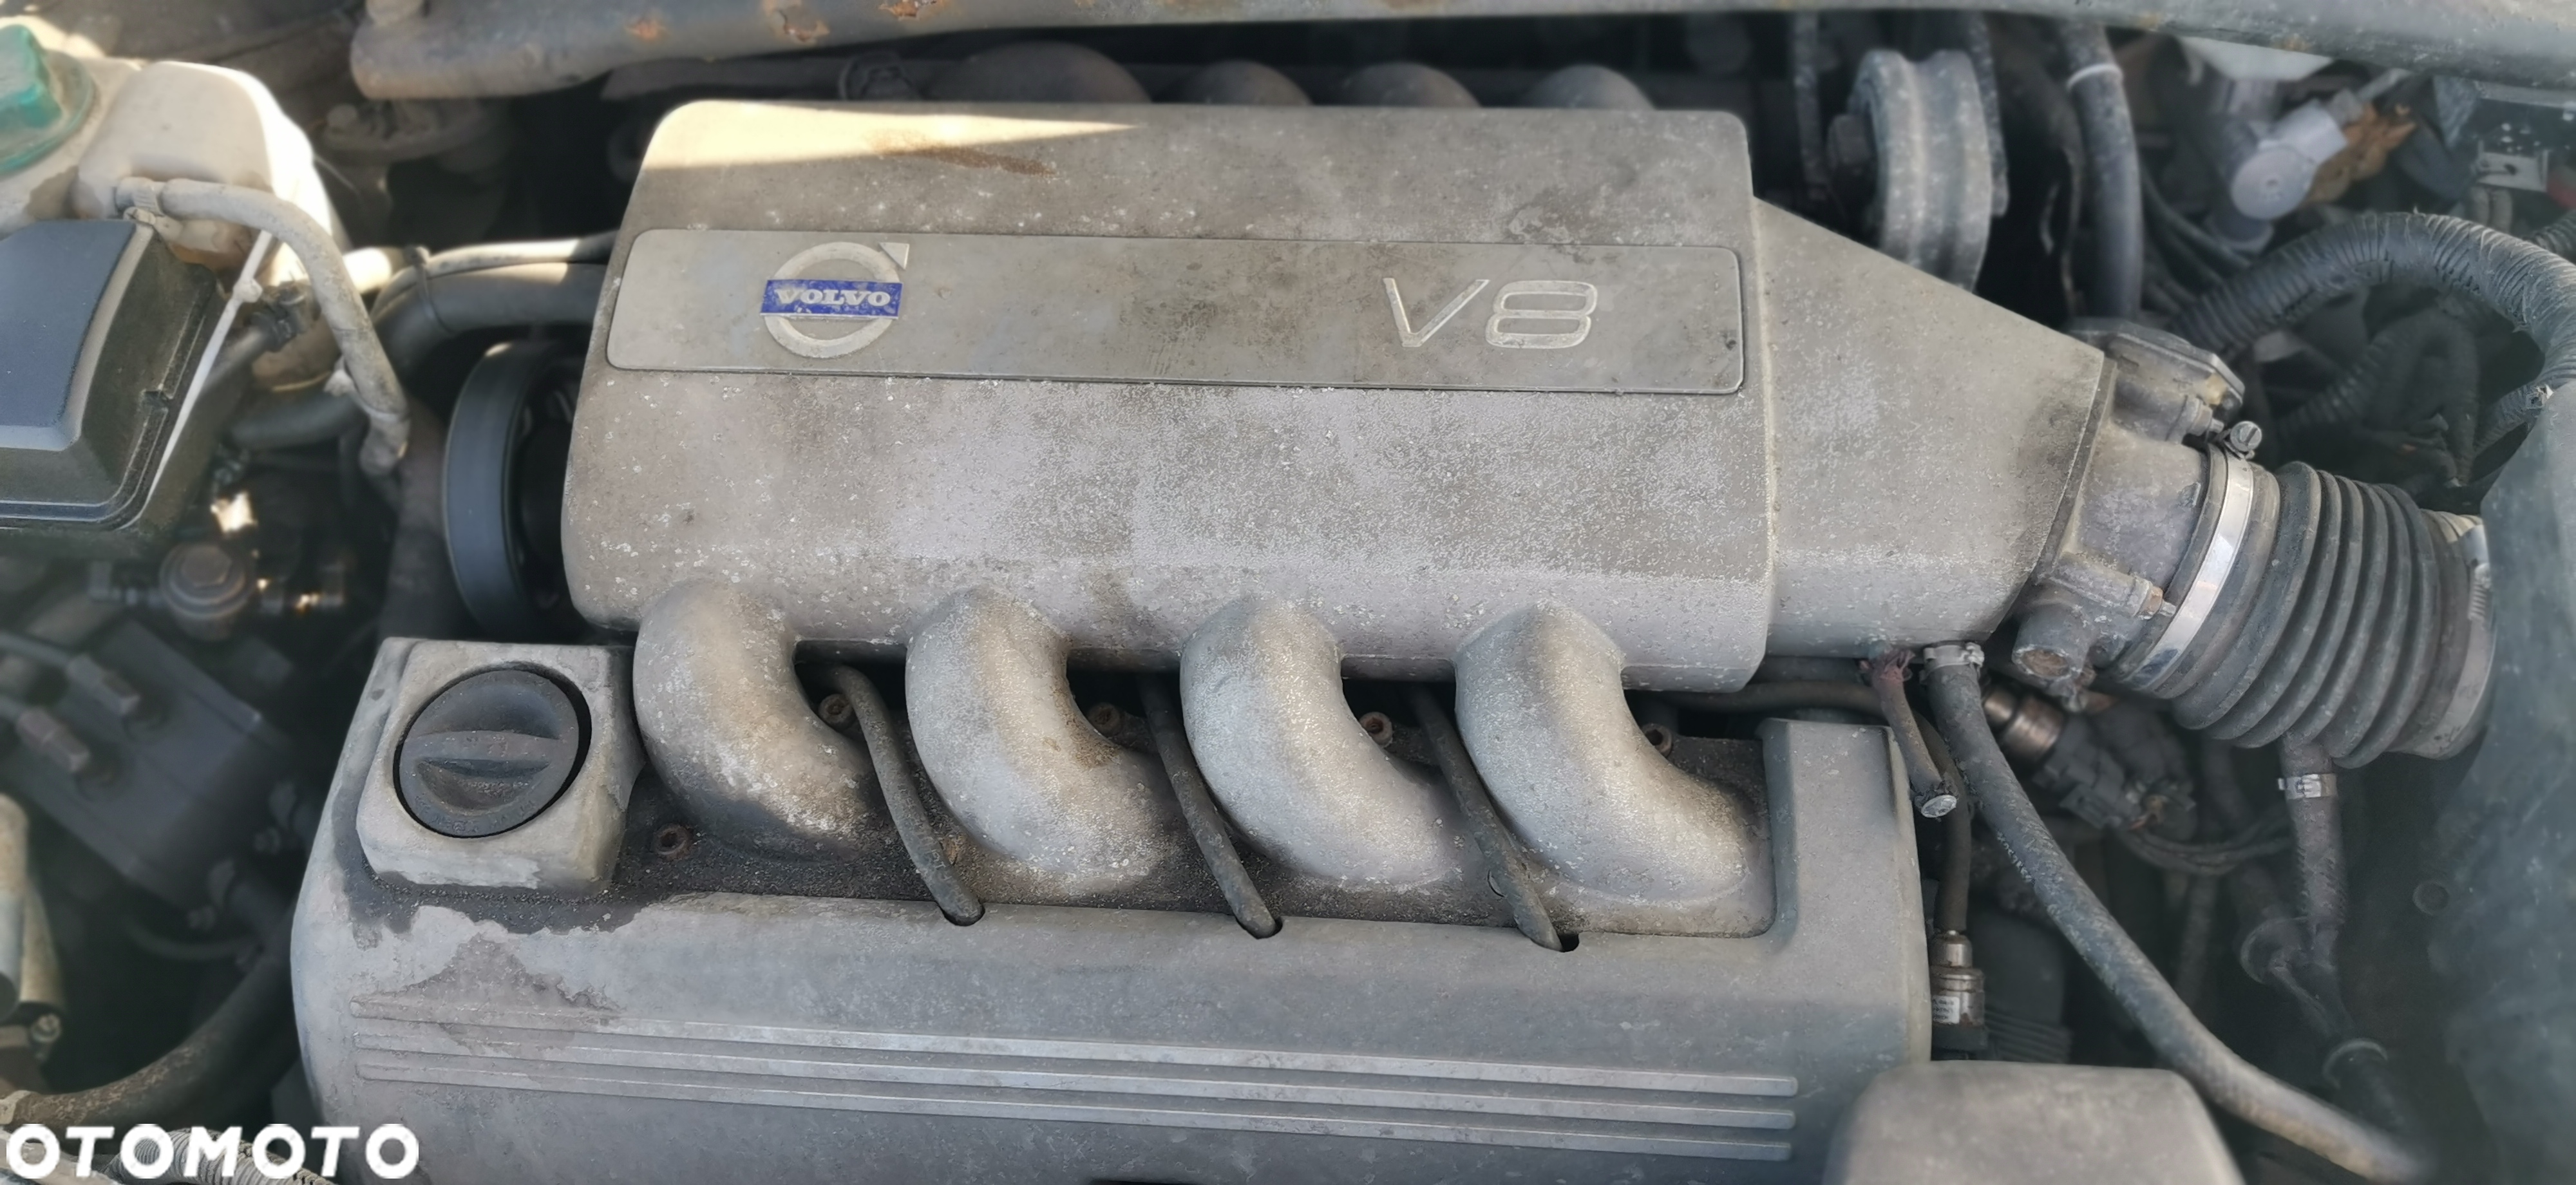 Volvo XC 90 4.4 V8 AWD Momentum - 4